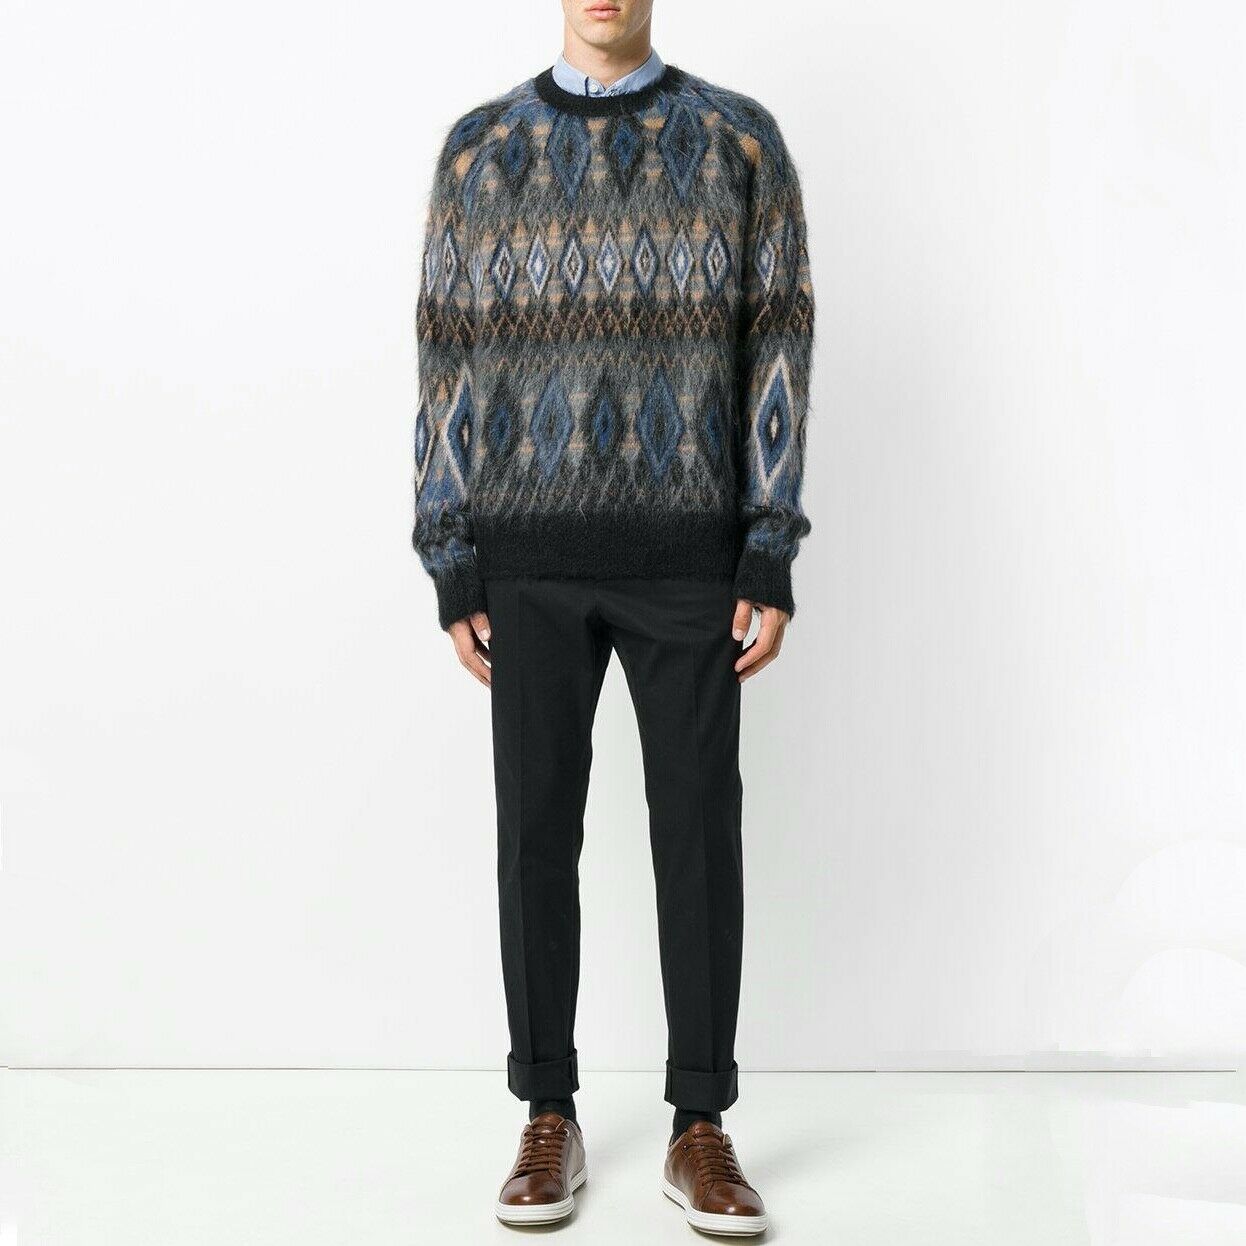 617-055 Men's New Mohair Sweater by Laneus